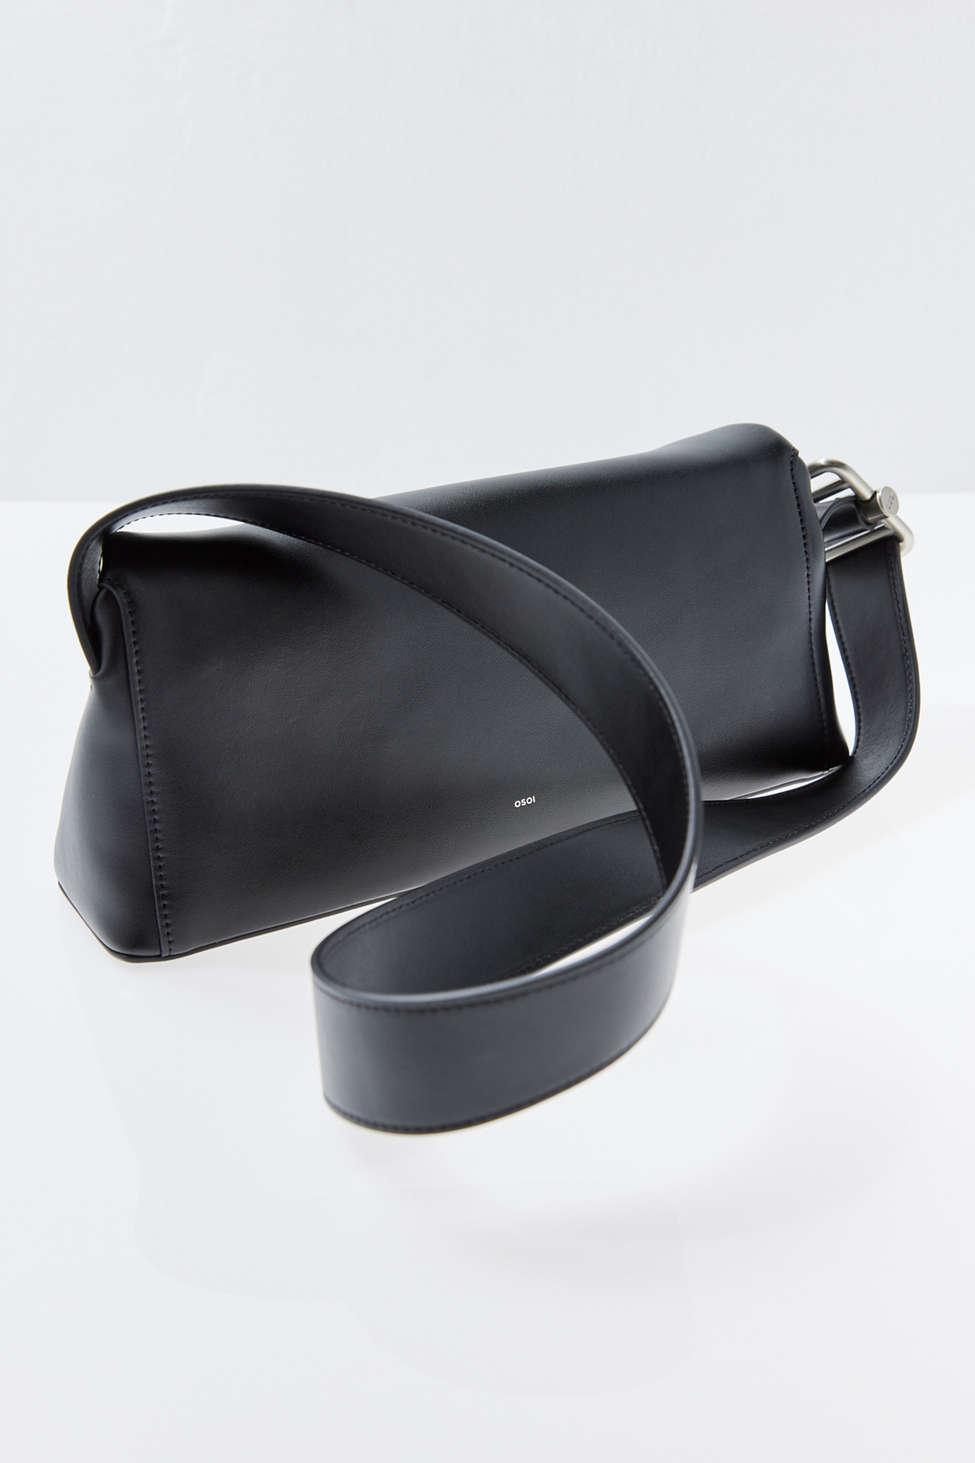 OSOI Folder Brot Handbag Smooth Cream Leather | Pipe and Row Seattle